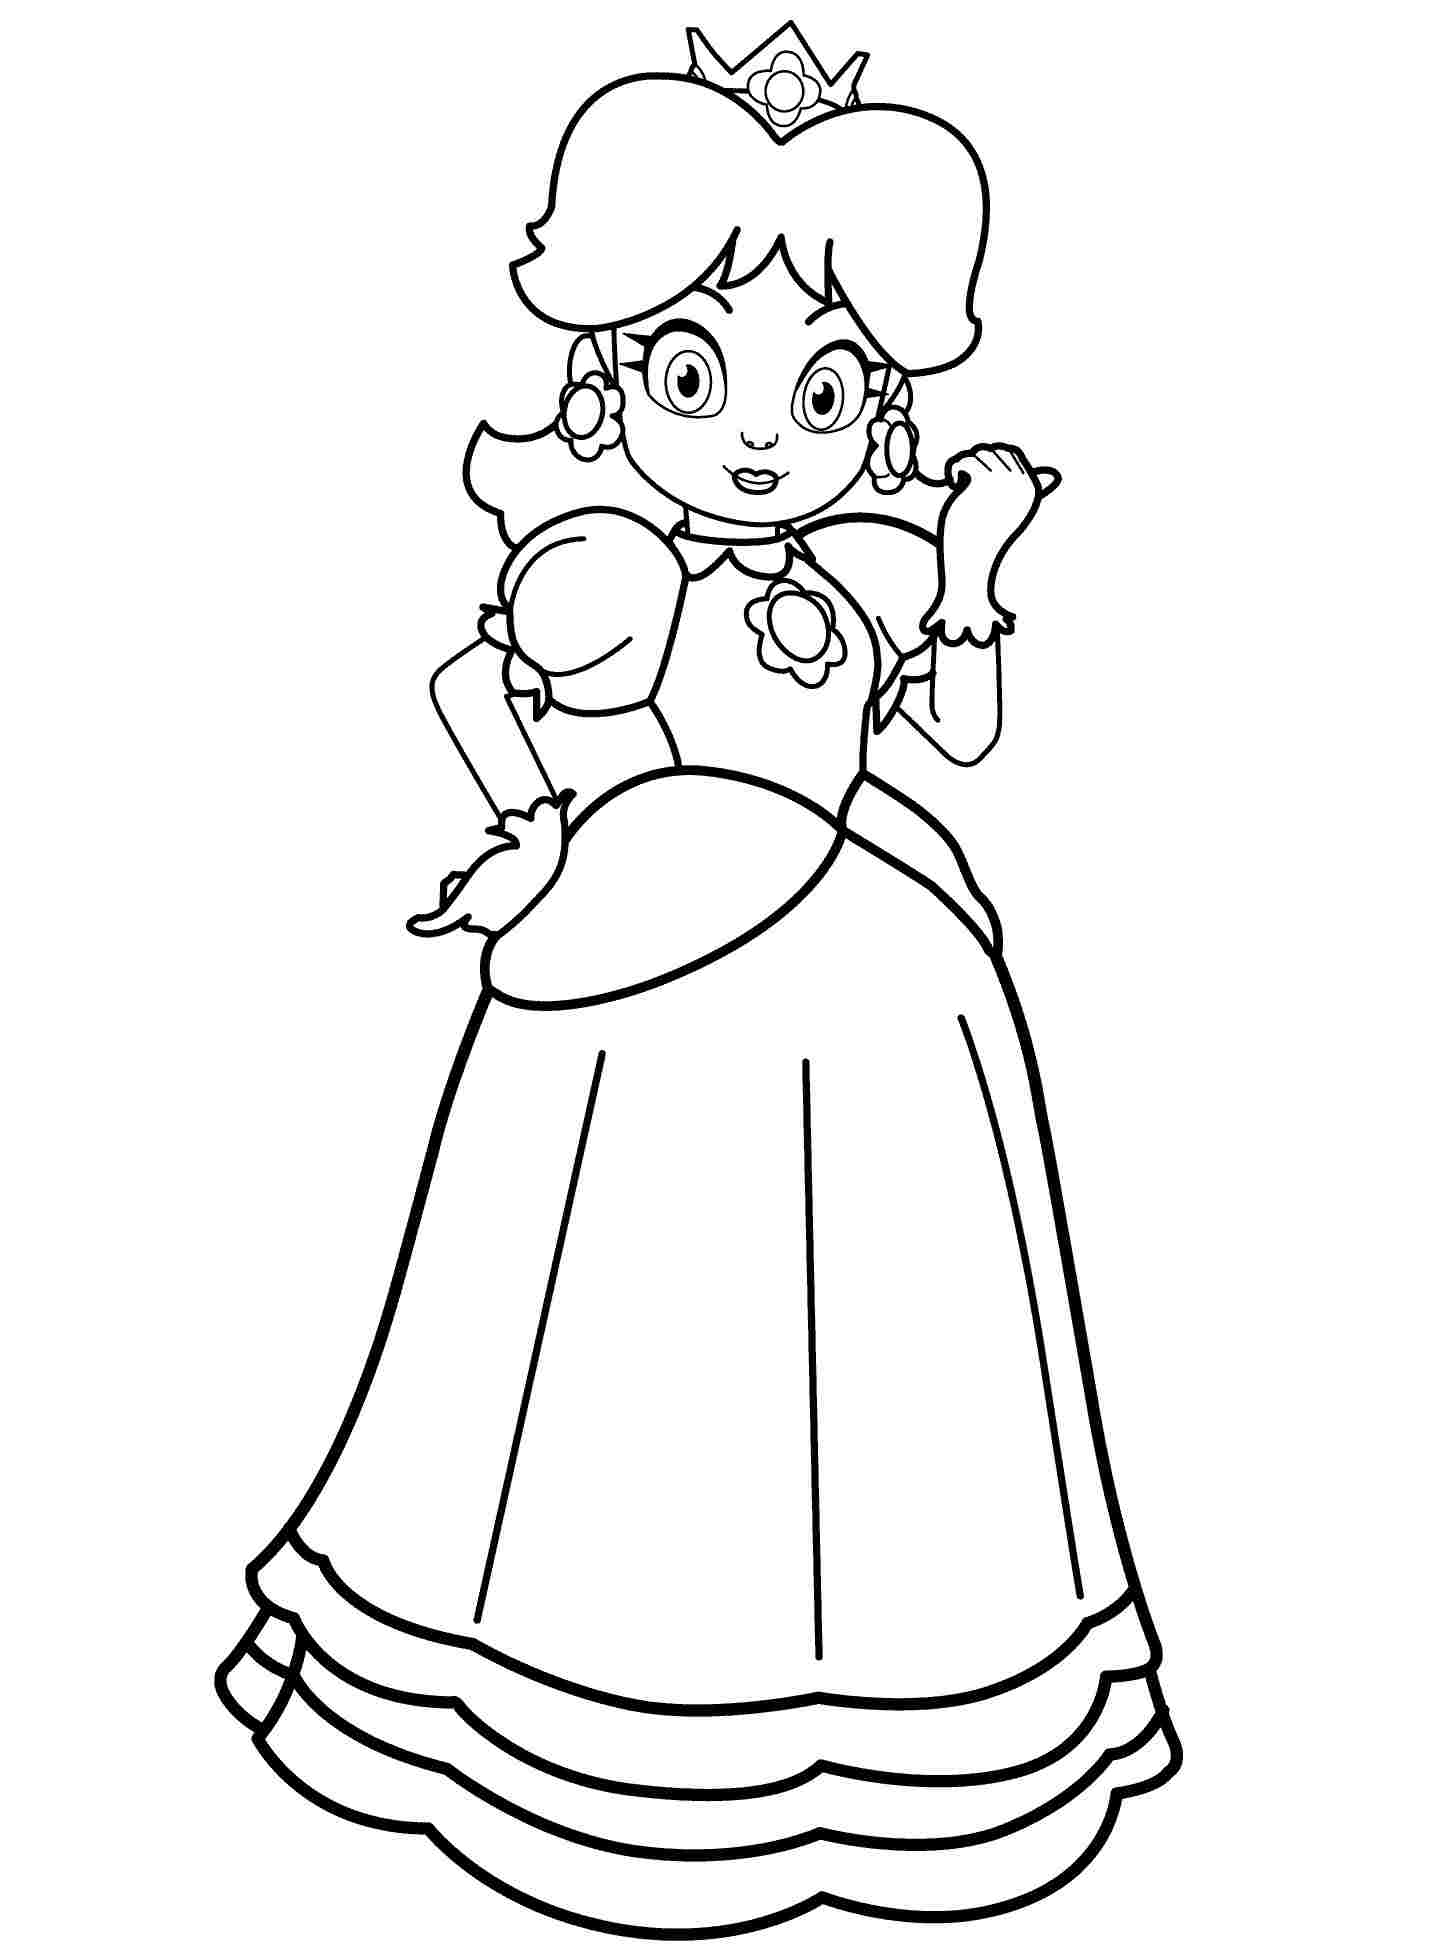 A princesa Daisy está apontando algo para colorir e imprimir